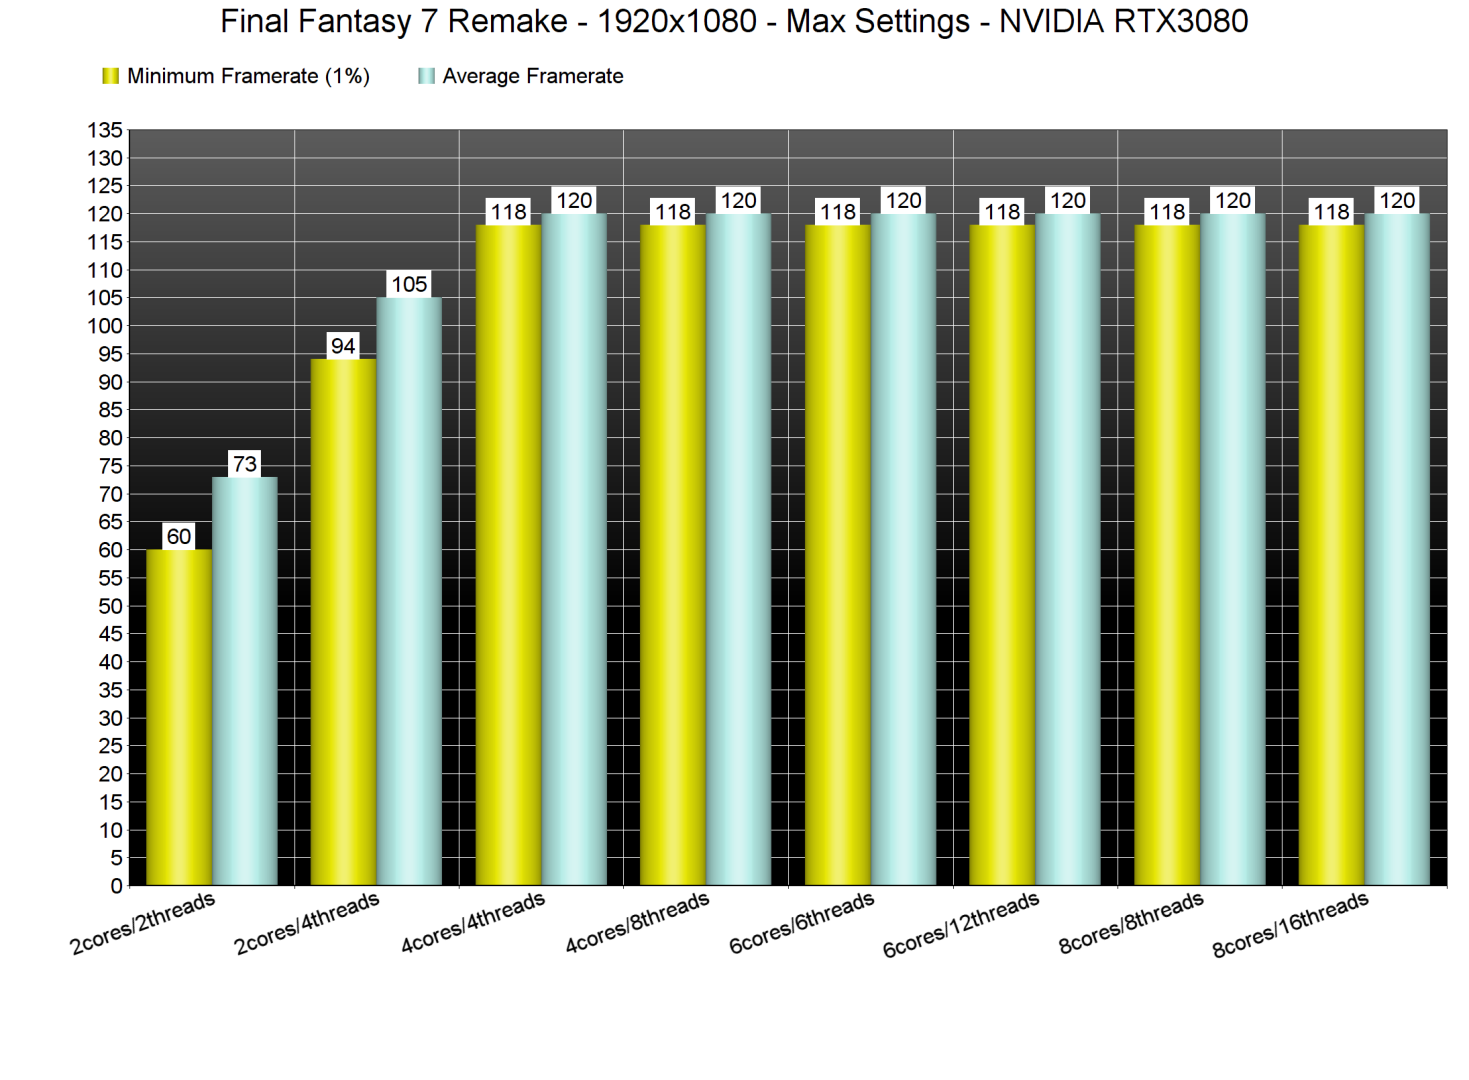 Final Fantasy 7 Remake CPU benchmarks